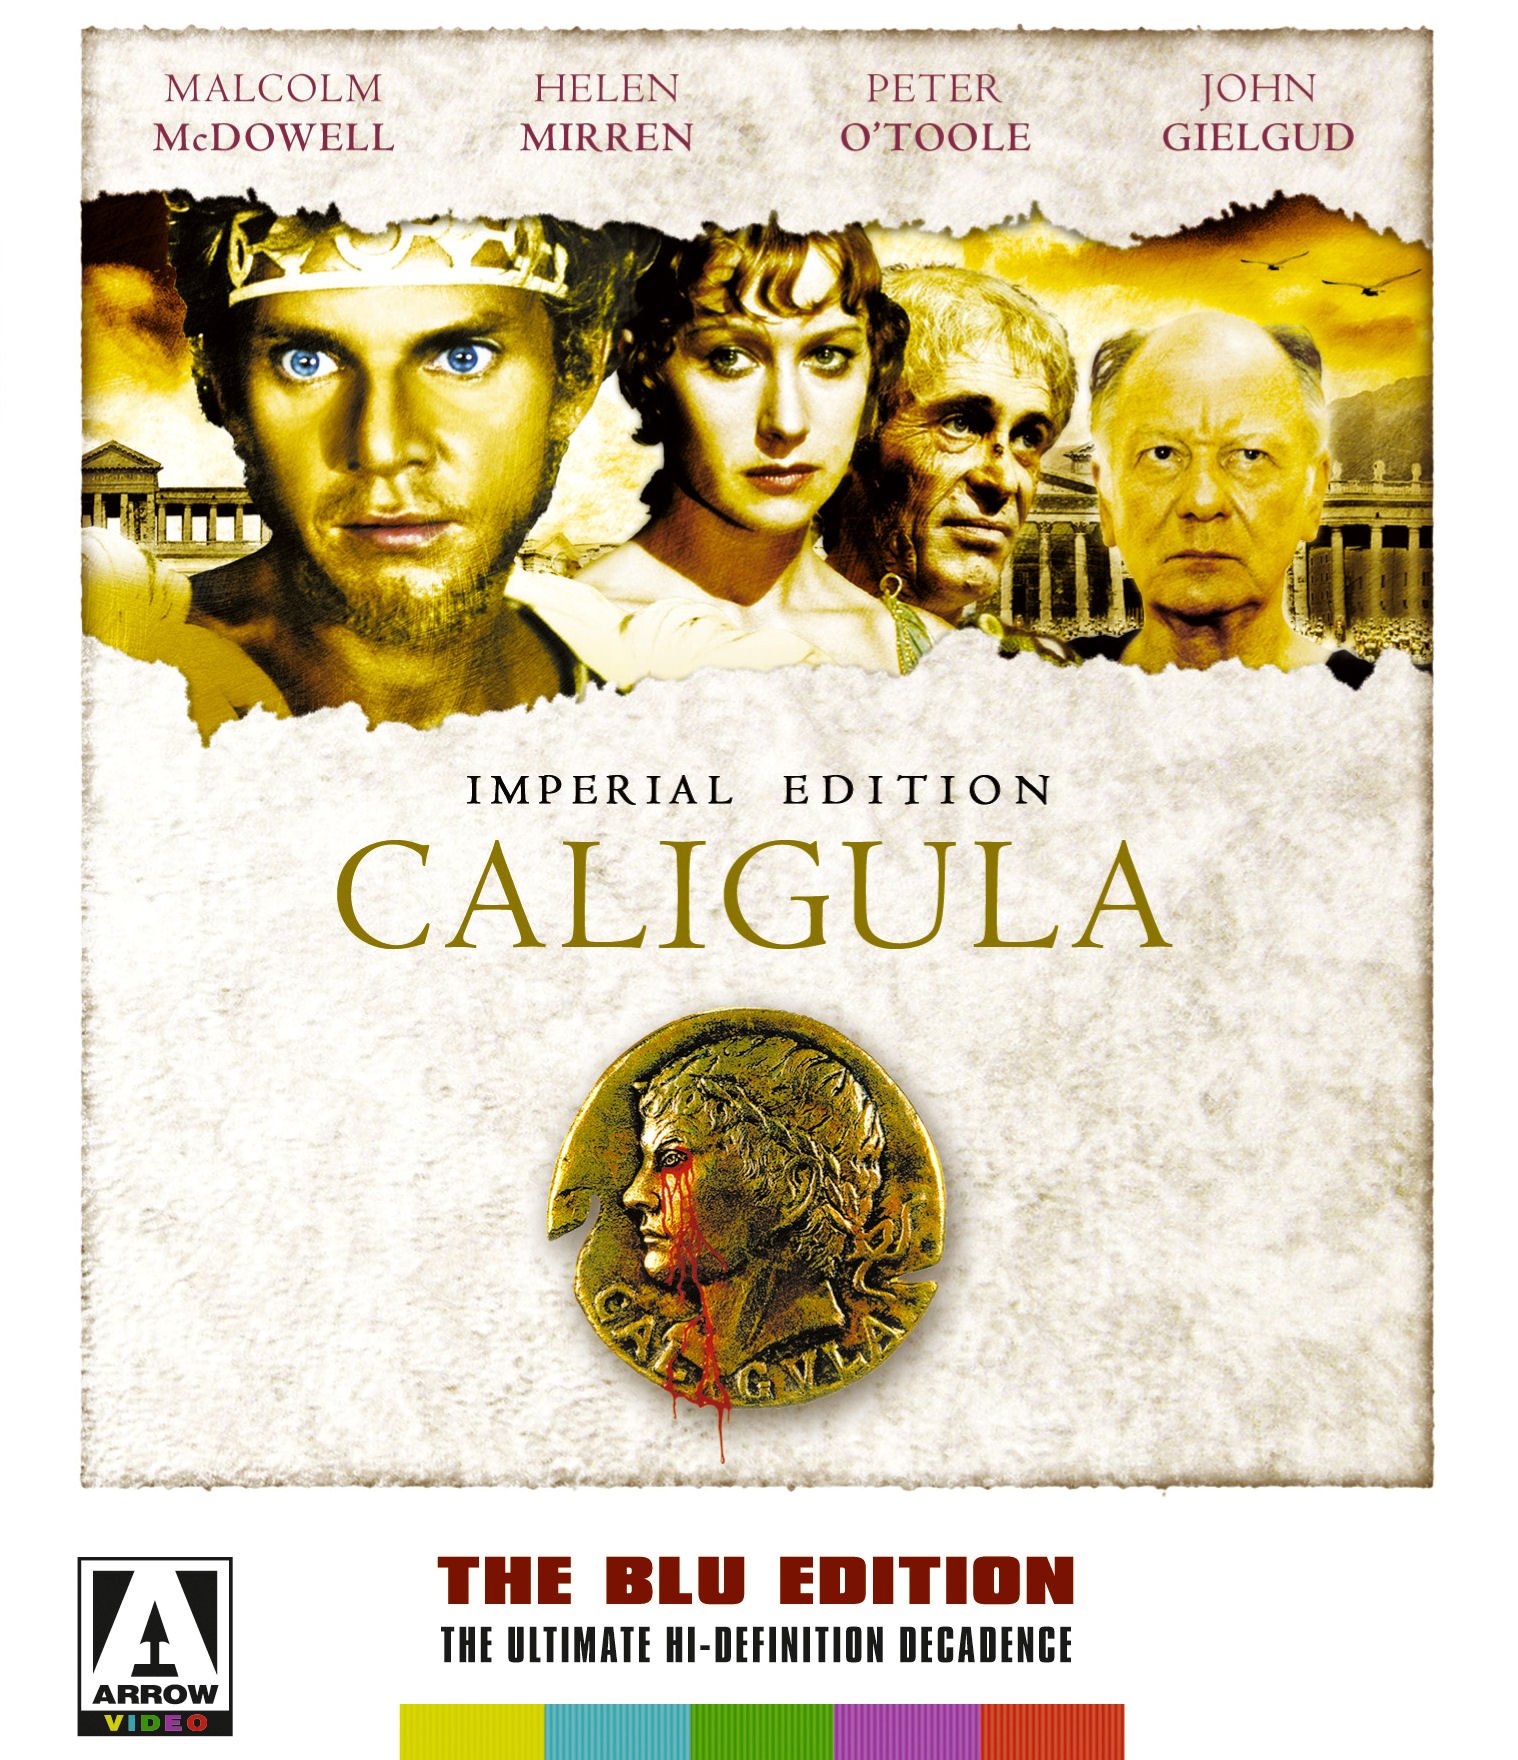 Caligula: The Blu Edition Alternate Cover. 